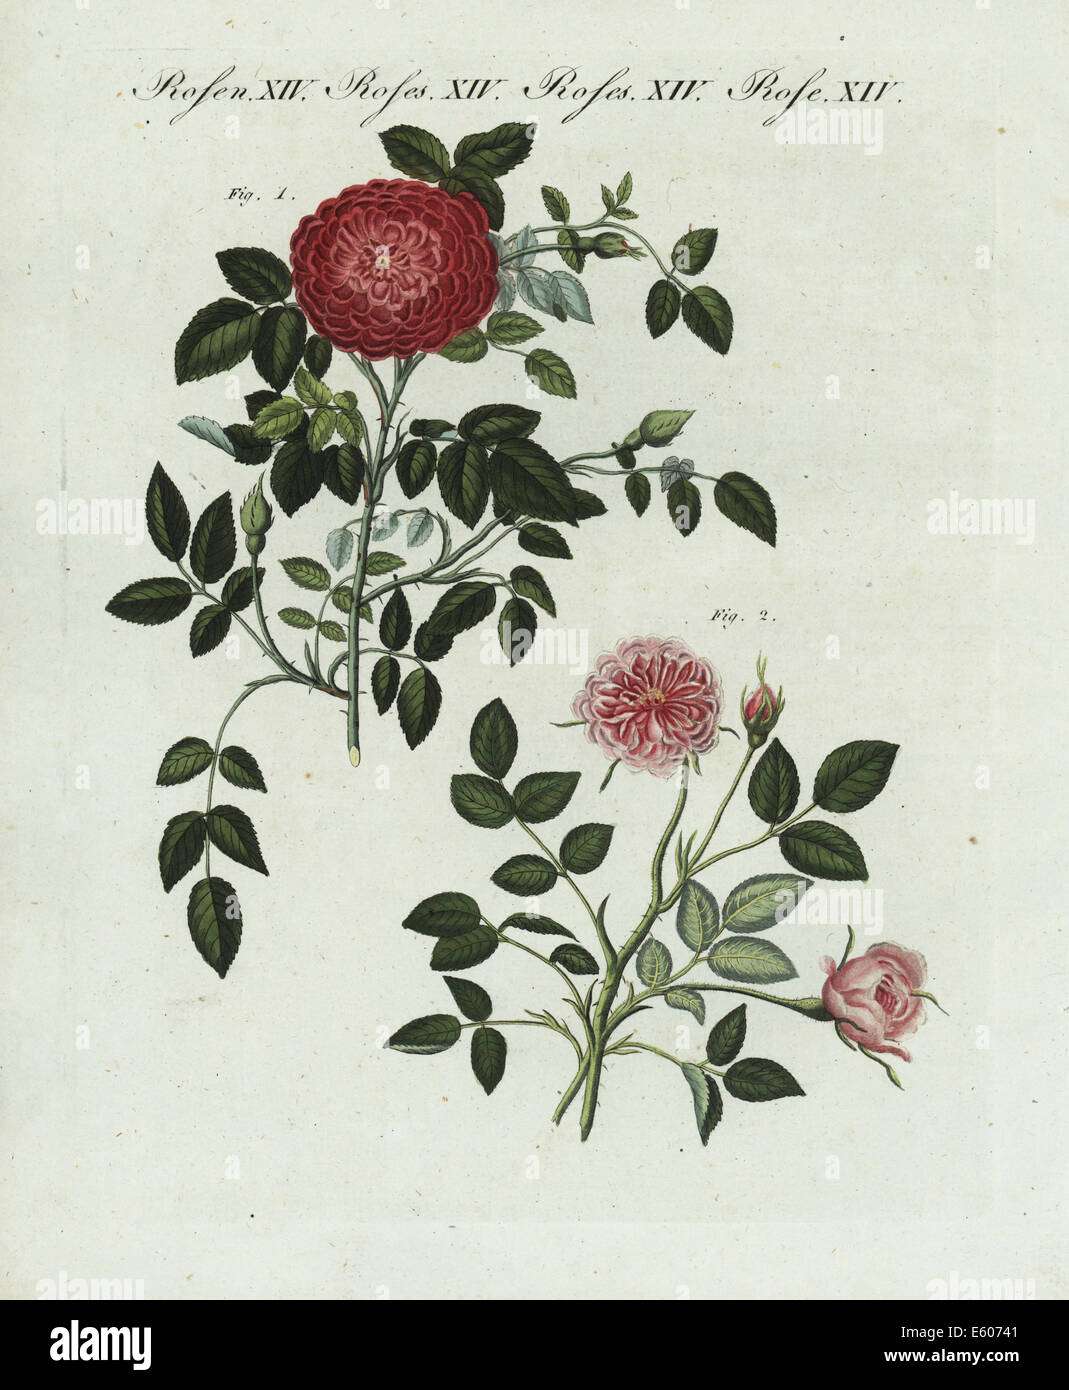 Small Provence rose, Rosa provincialis, and Dijon rose, Rosa dijonensis. Stock Photo